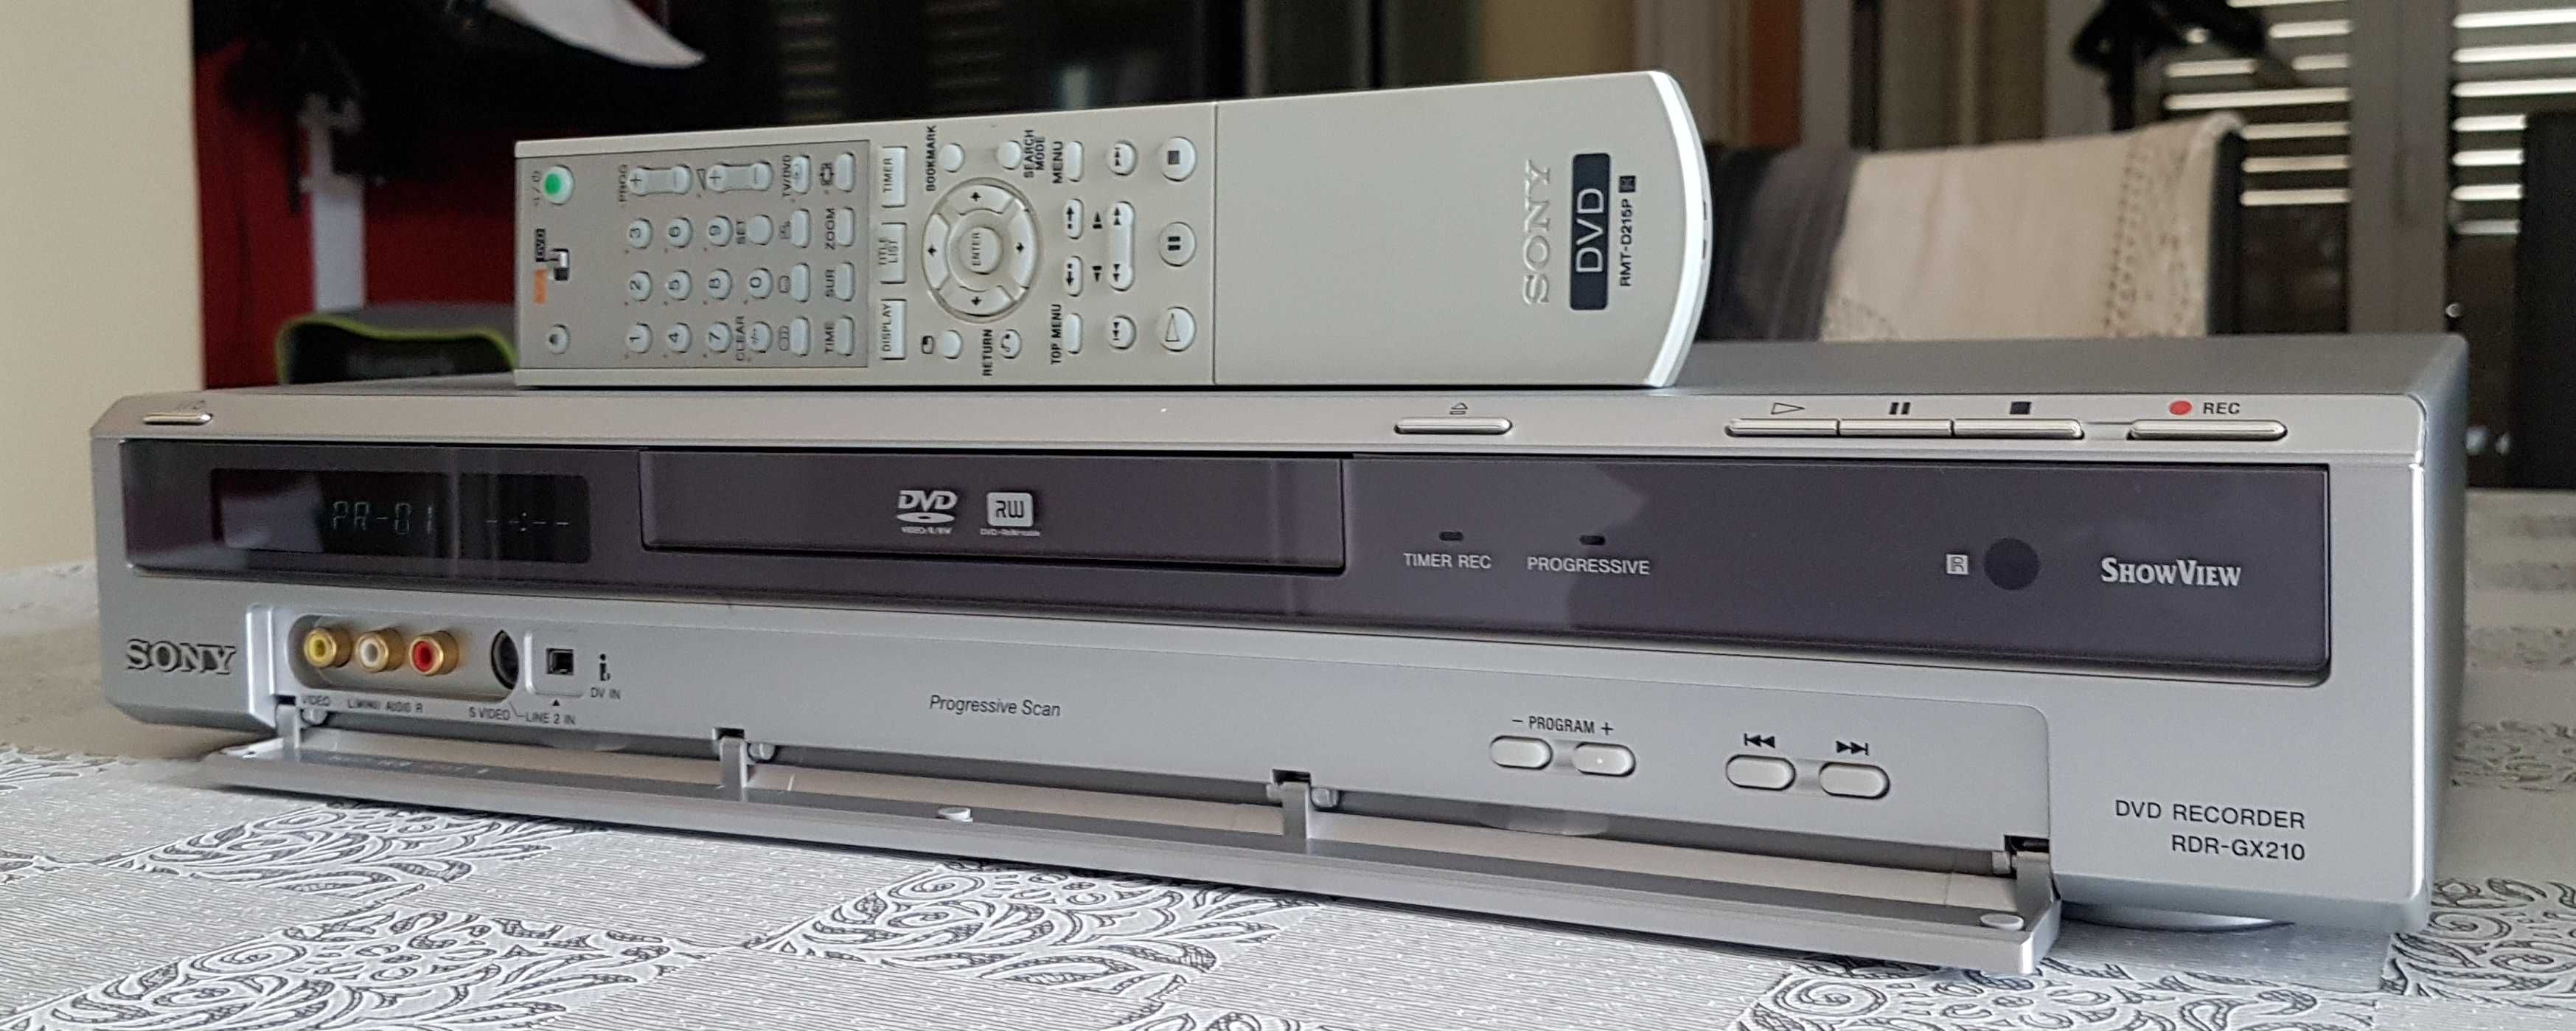 DVD Reprodutor e Gravador Sony RDR-GX210, LÊ CDs MP3